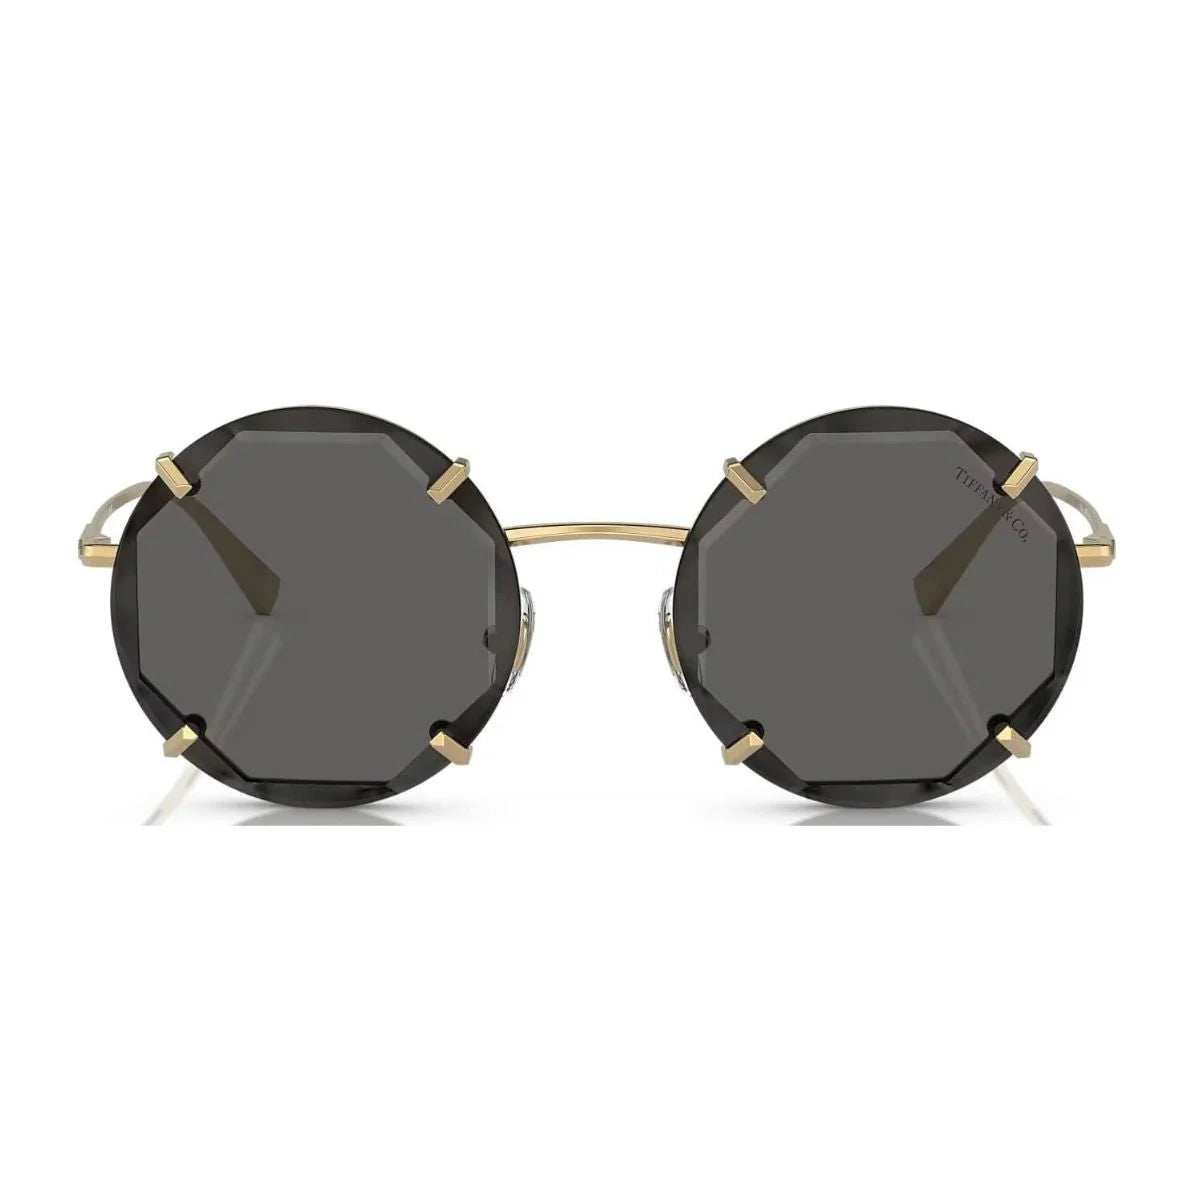 "Top 10 branded premium luxury sunglasses pick of the season Optorium"